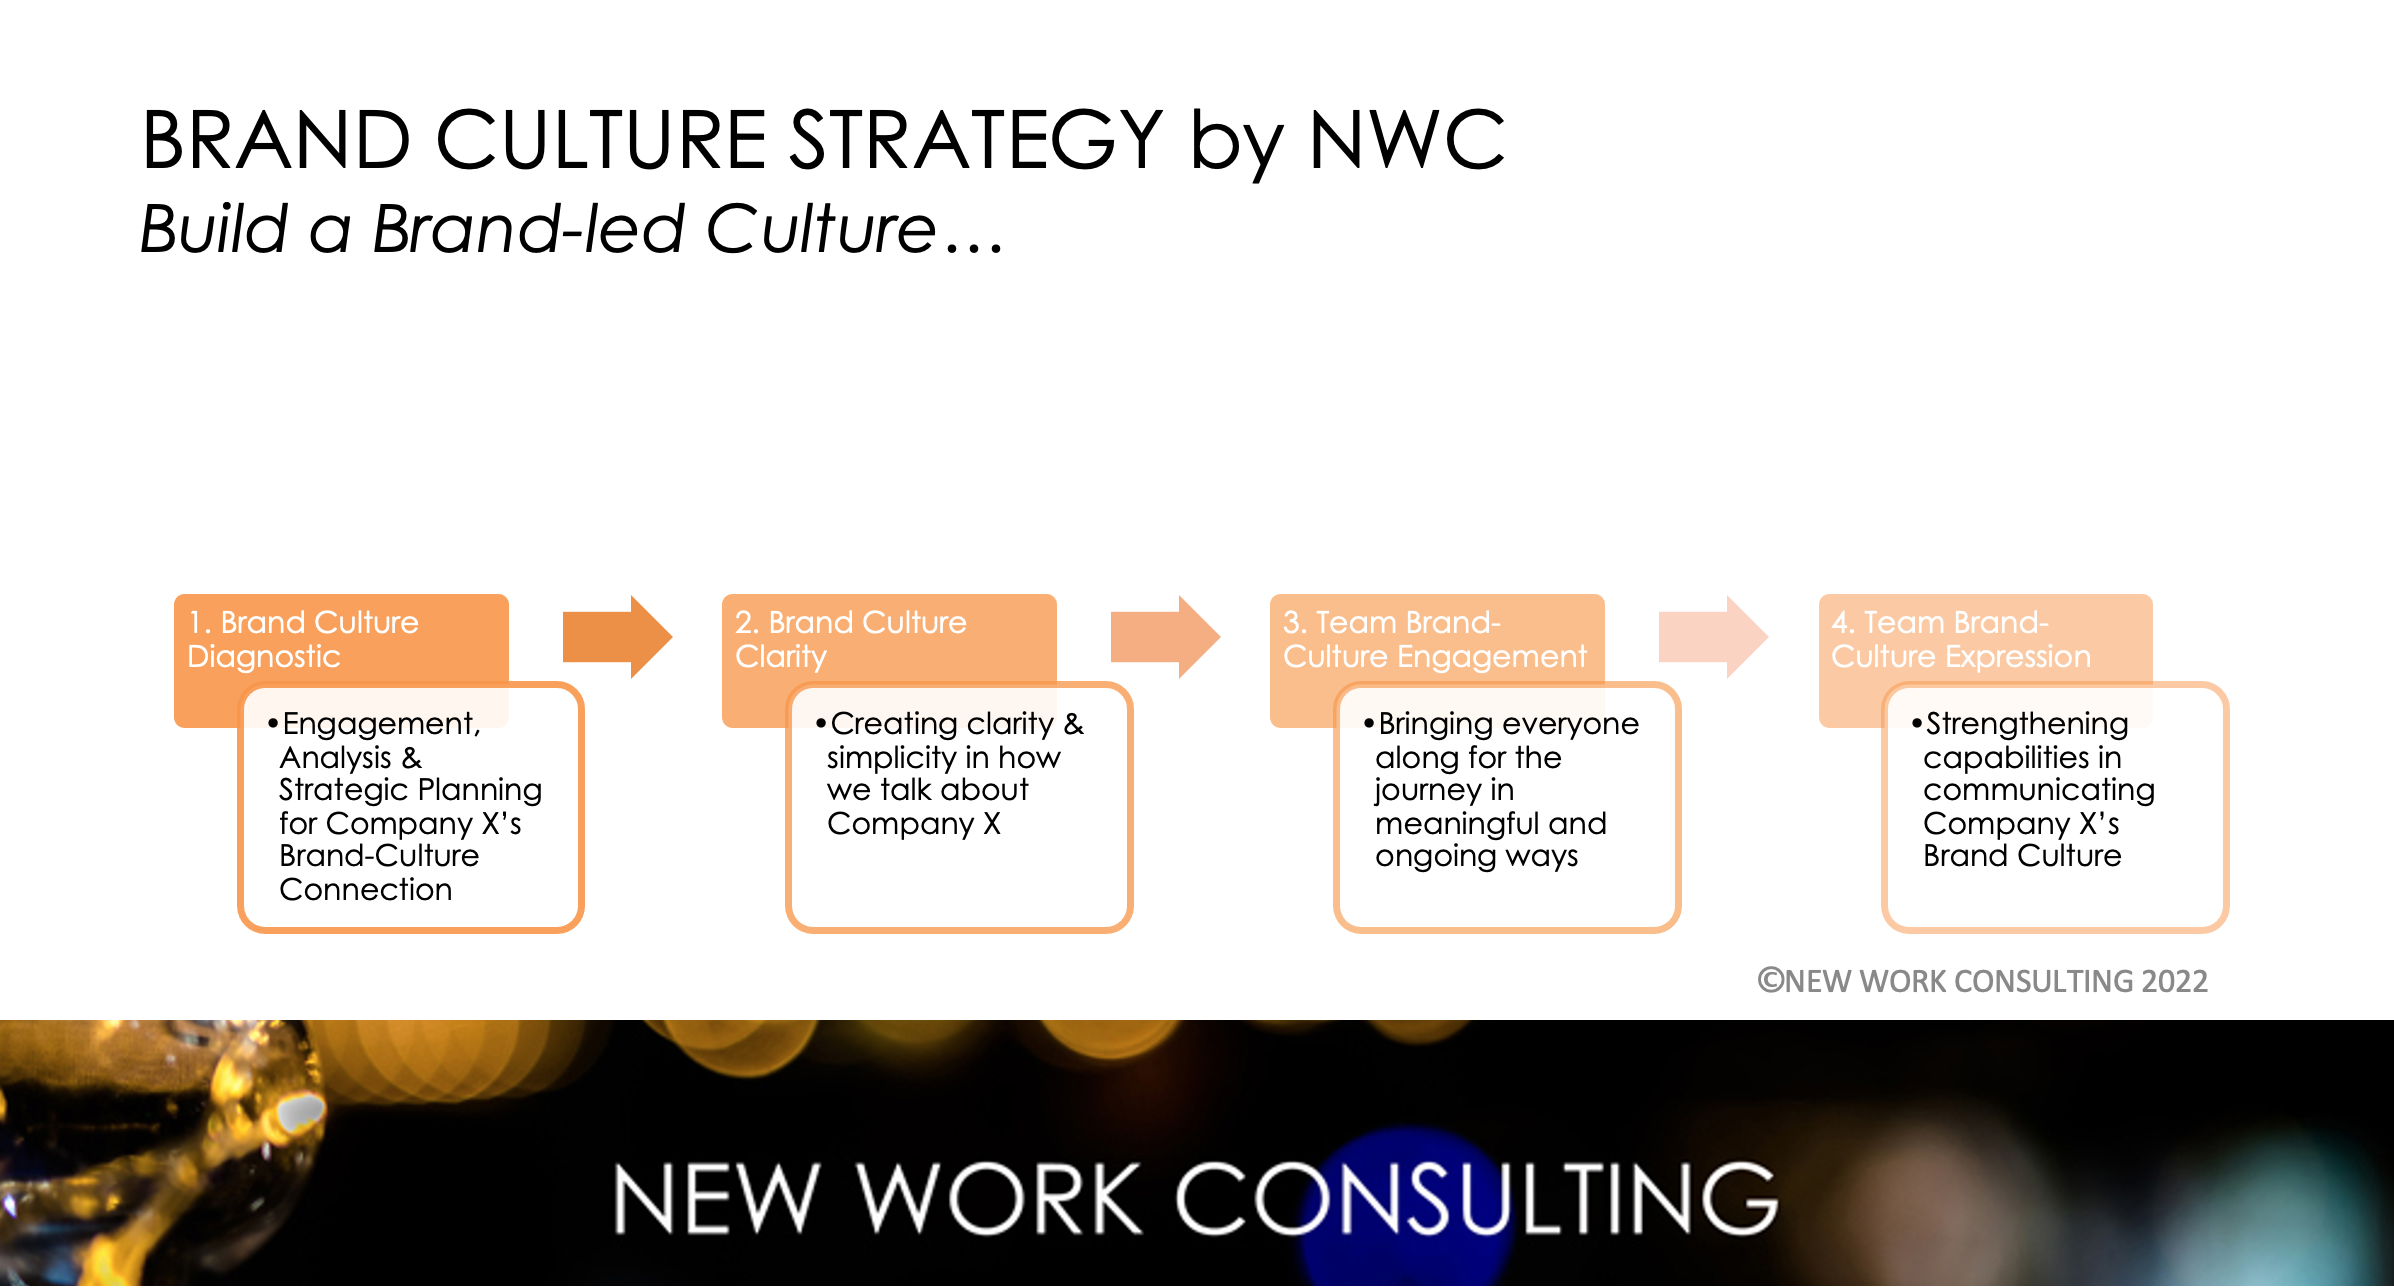 Brand Culture Framework by NWC